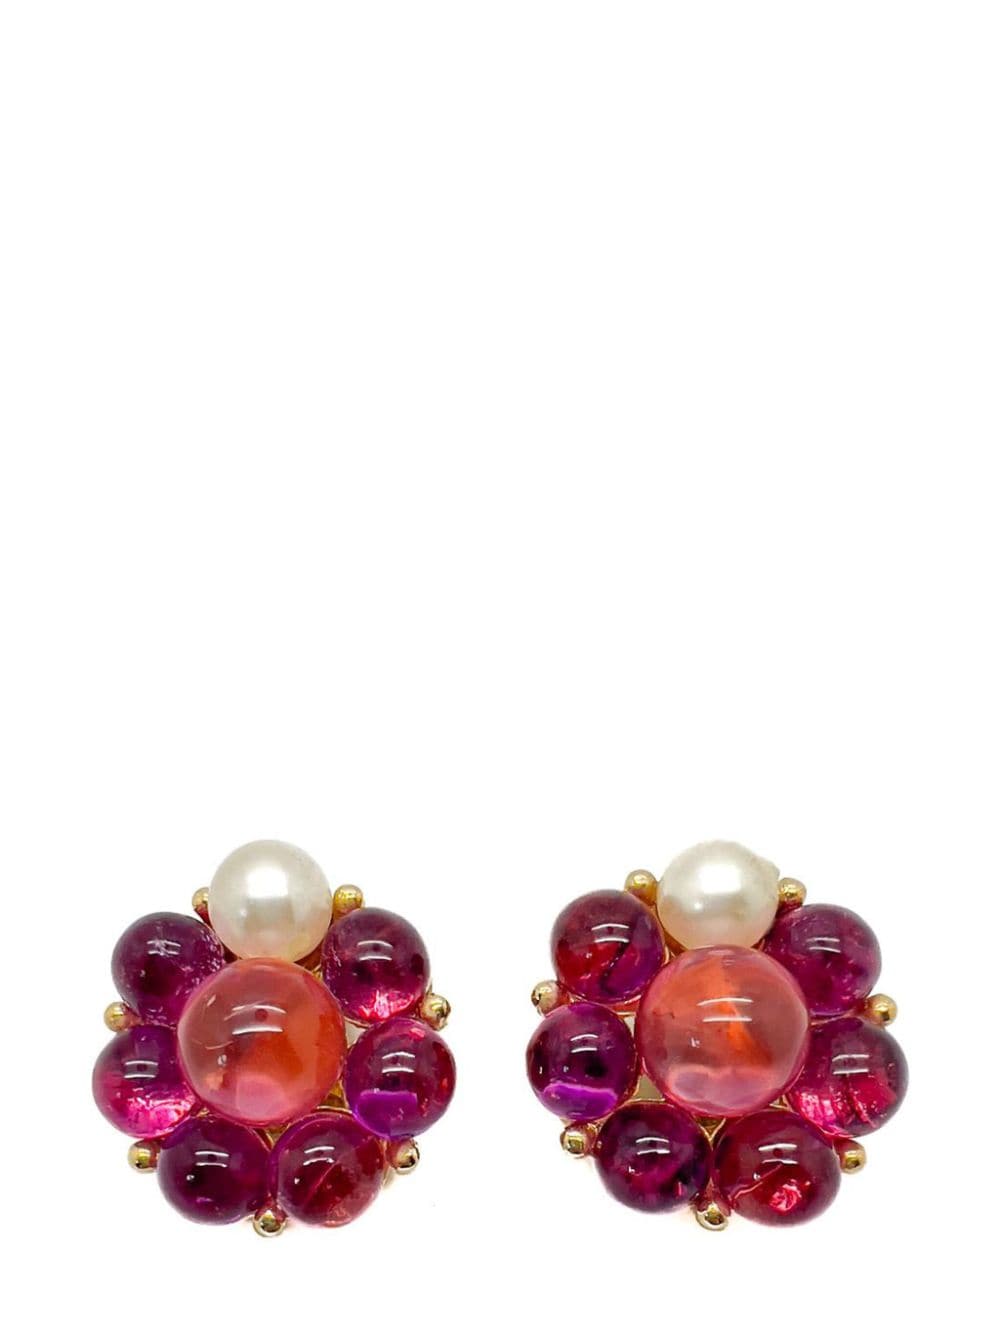 Jennifer Gibson Jewellery Vintage Pink Glass Sphere & Pearl Earrings 1970s von Jennifer Gibson Jewellery